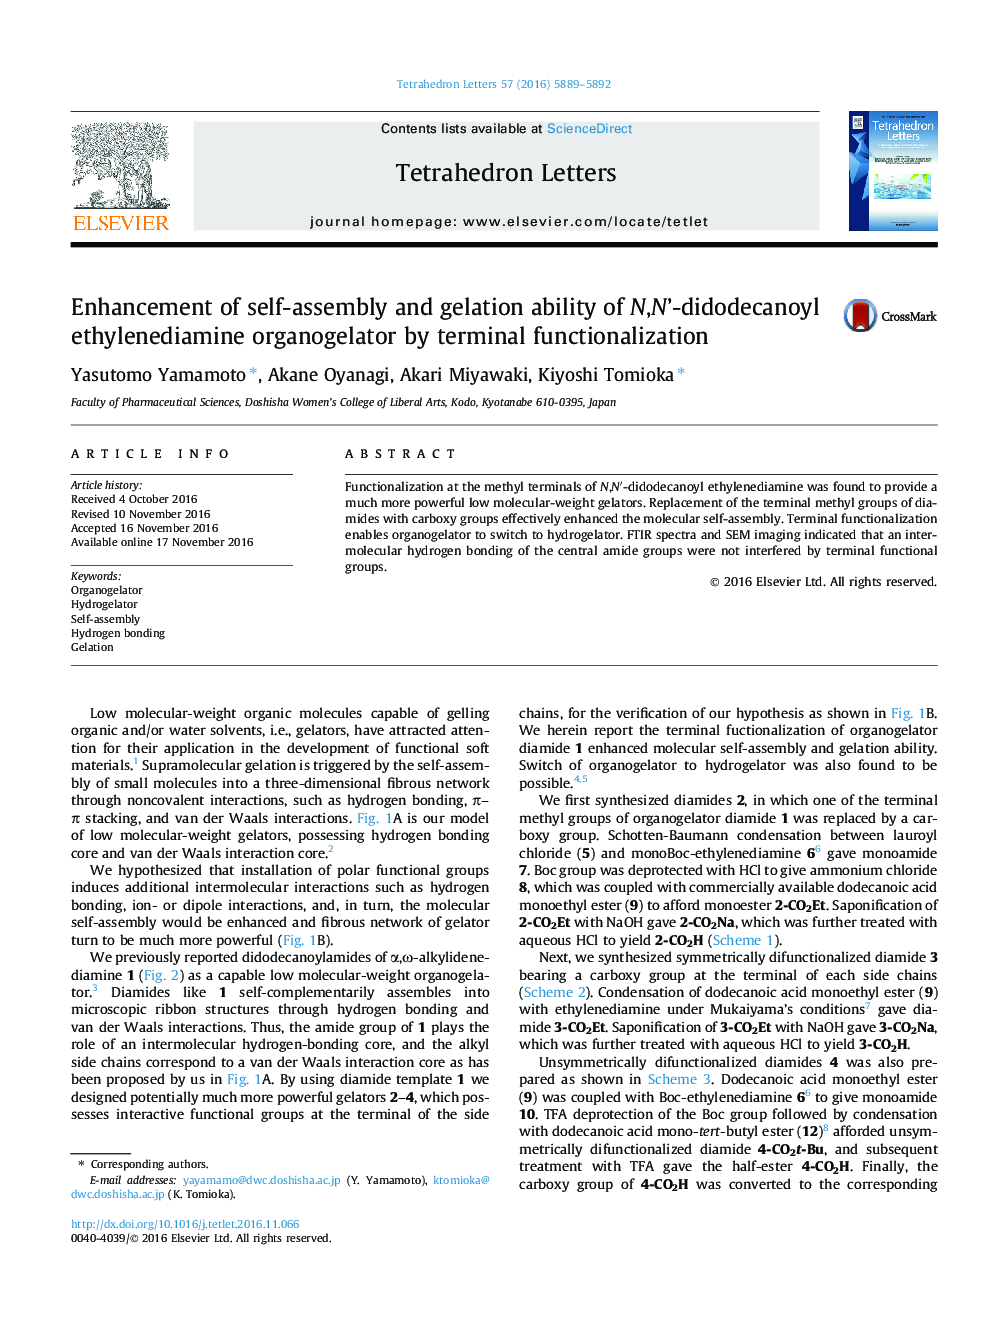 Enhancement of self-assembly and gelation ability of N,N'-didodecanoyl ethylenediamine organogelator by terminal functionalization